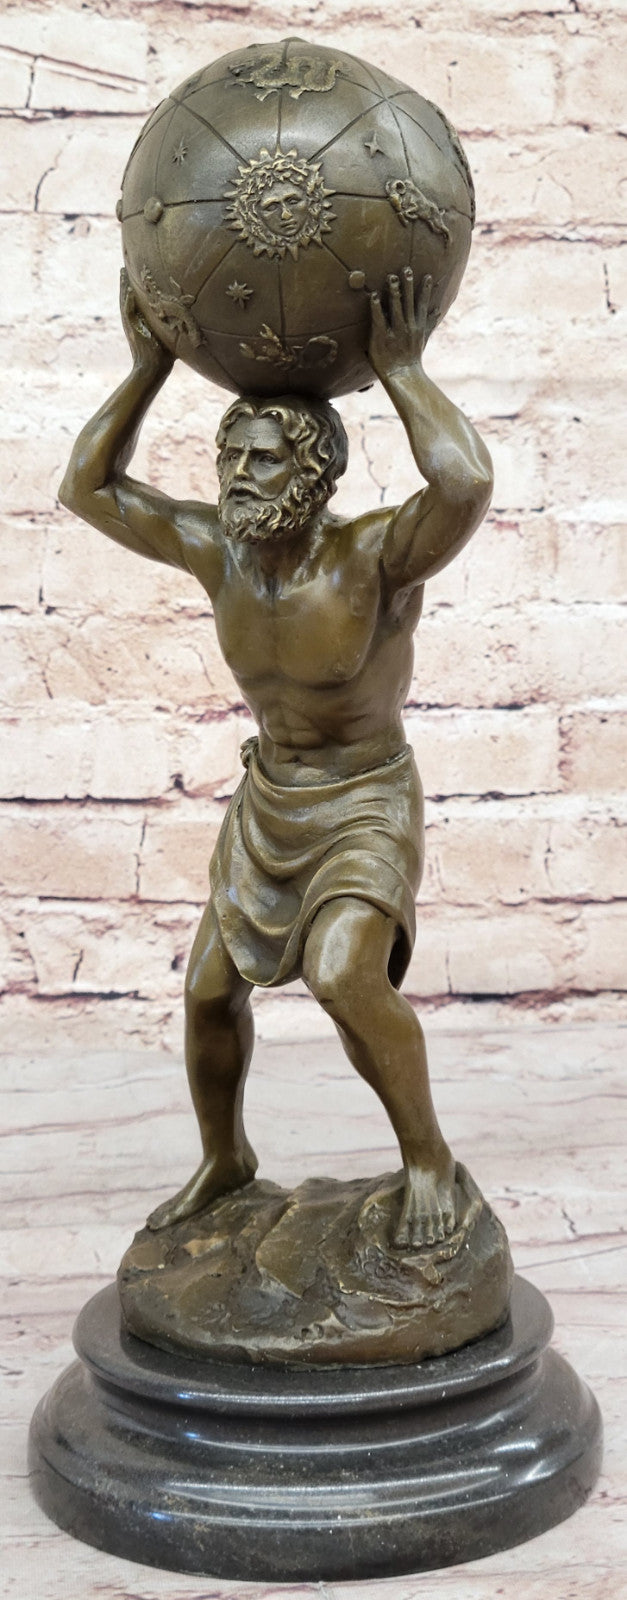 Art Deco Original Aldo Vitaleh Carrying the World Bronze Sculpture Figurine SALE